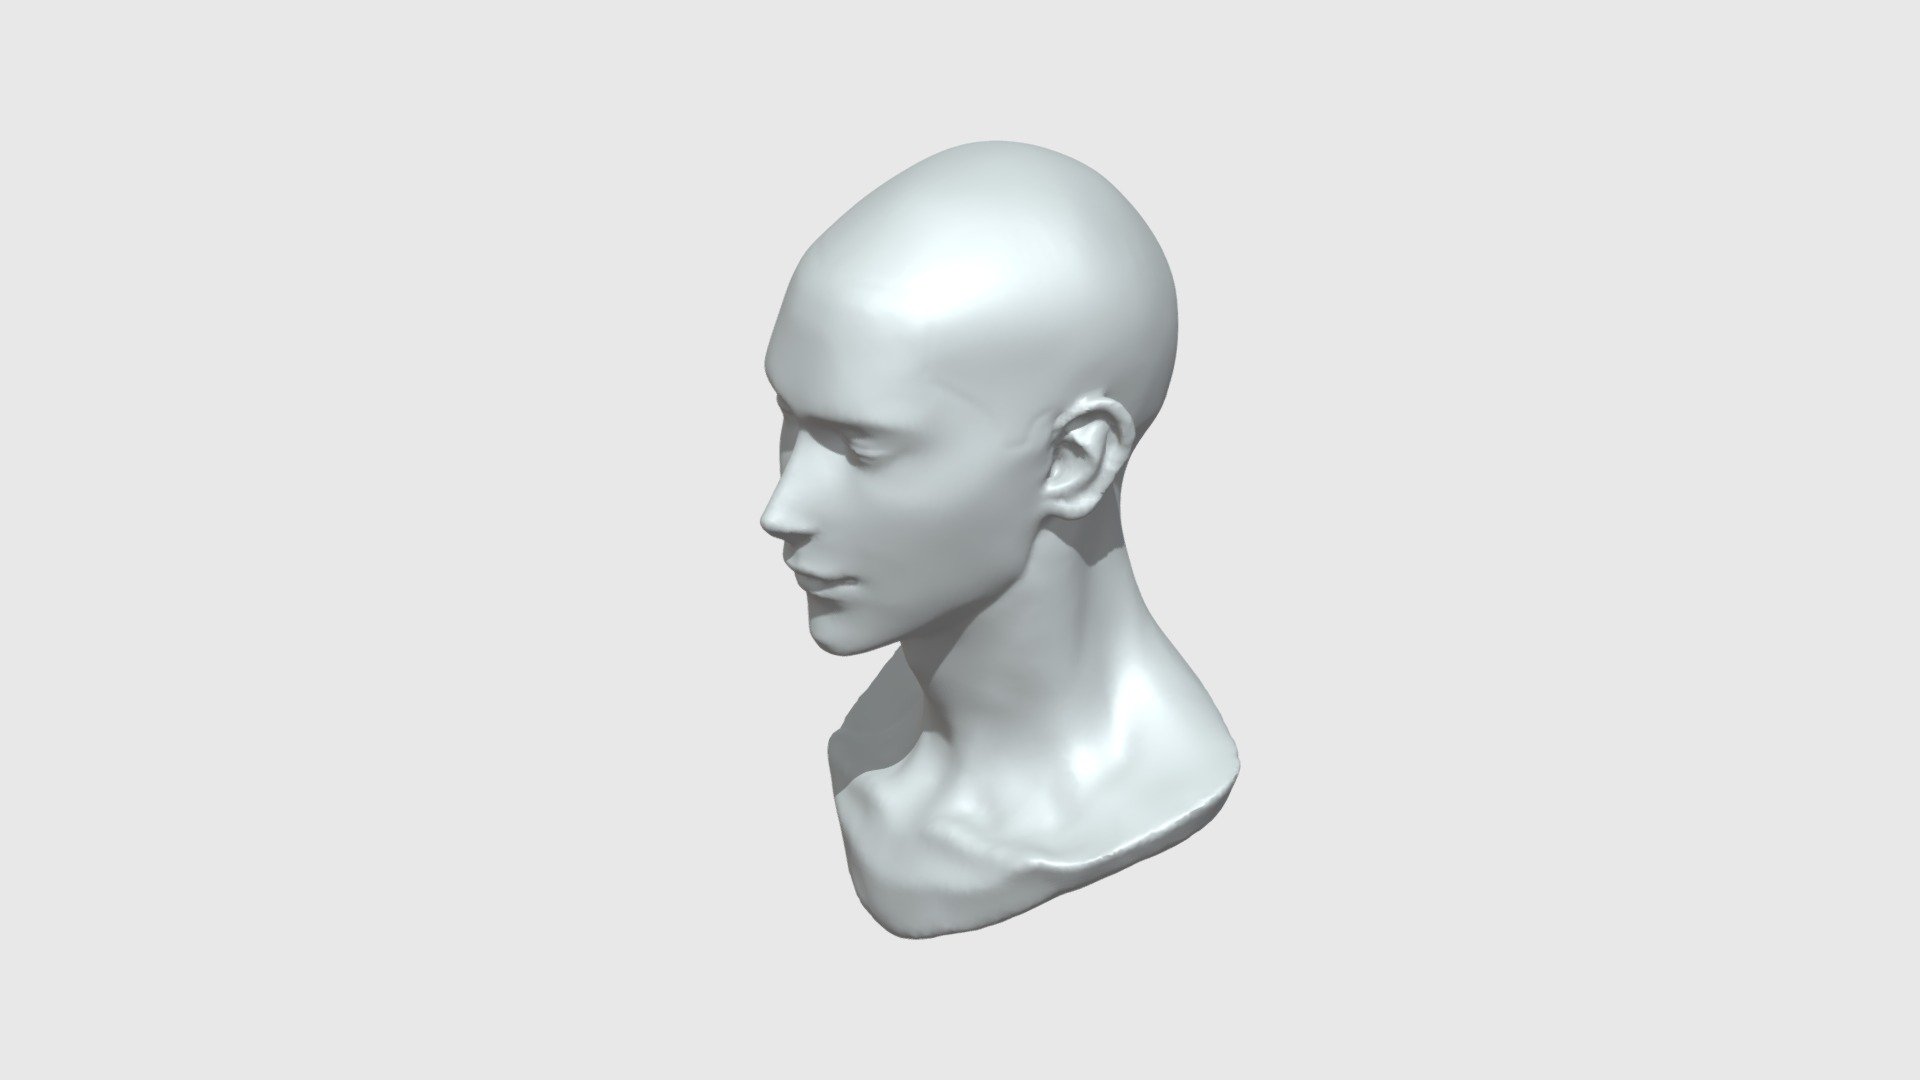 ikemen_head for illustration
イラスト用イケメンヘッドです - ikemen_head - 3D model by sculpchan0427 (@sculptor0427) 3d model